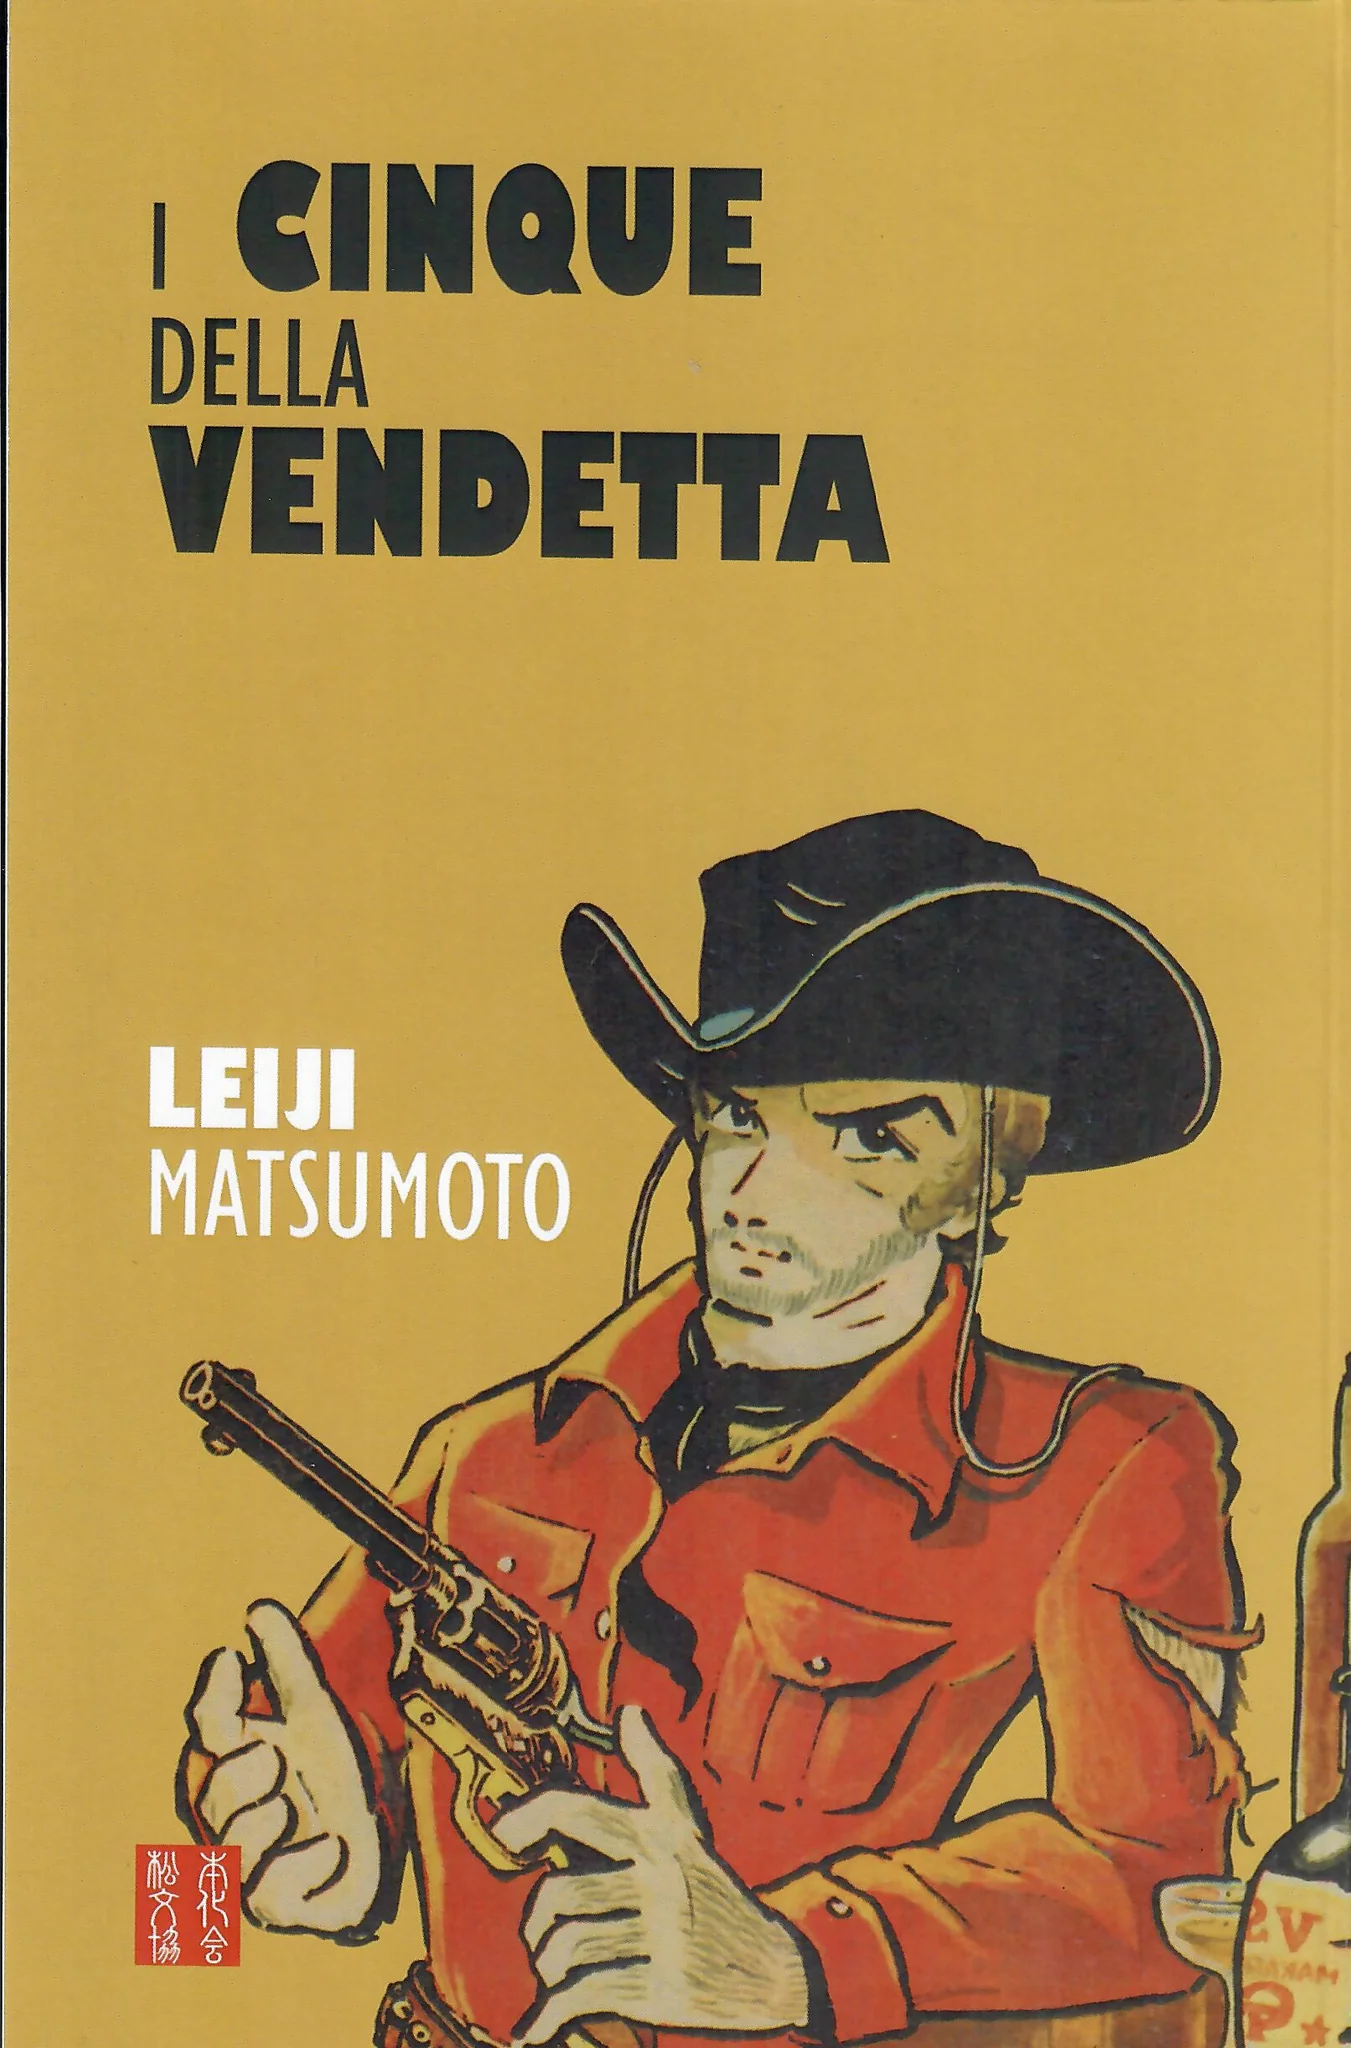 “The Five of Vengeance”: Spaghetti Western style manga.